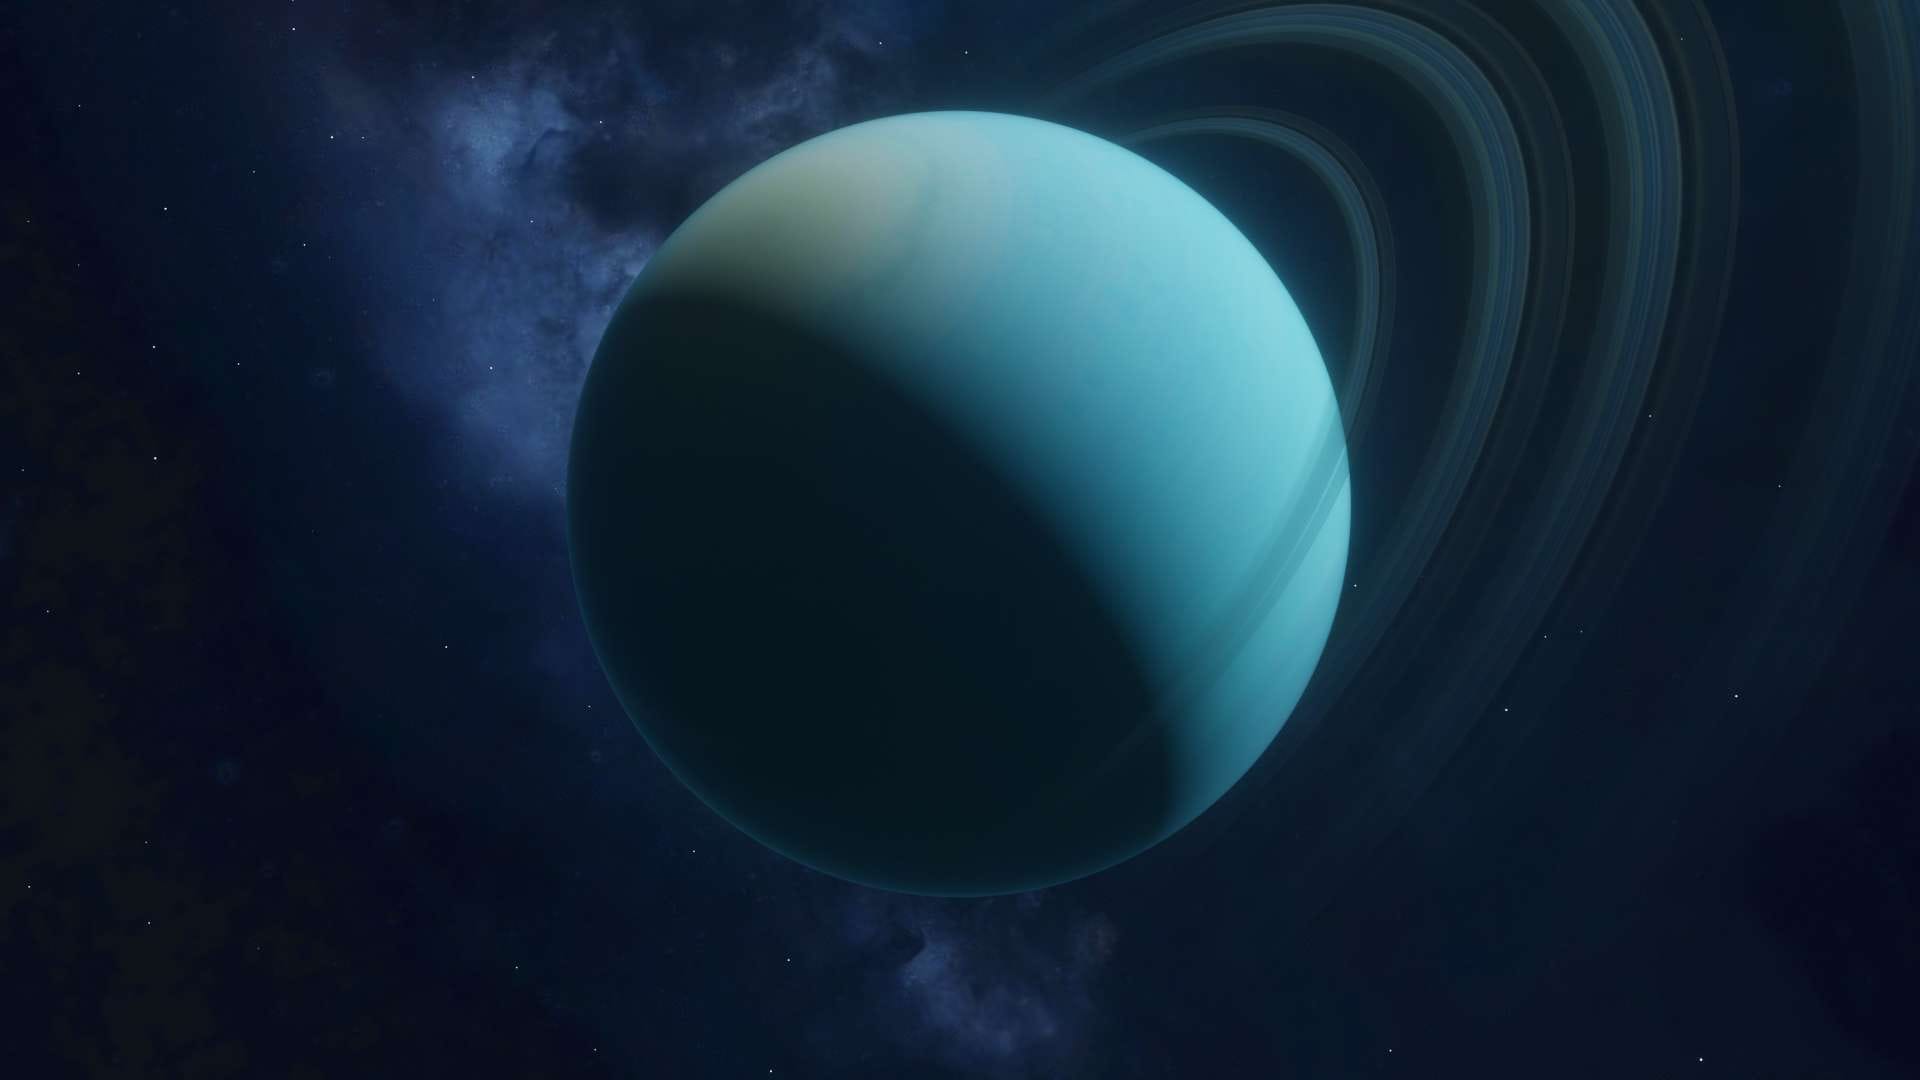 Planet Uranus: The Coldest Planet